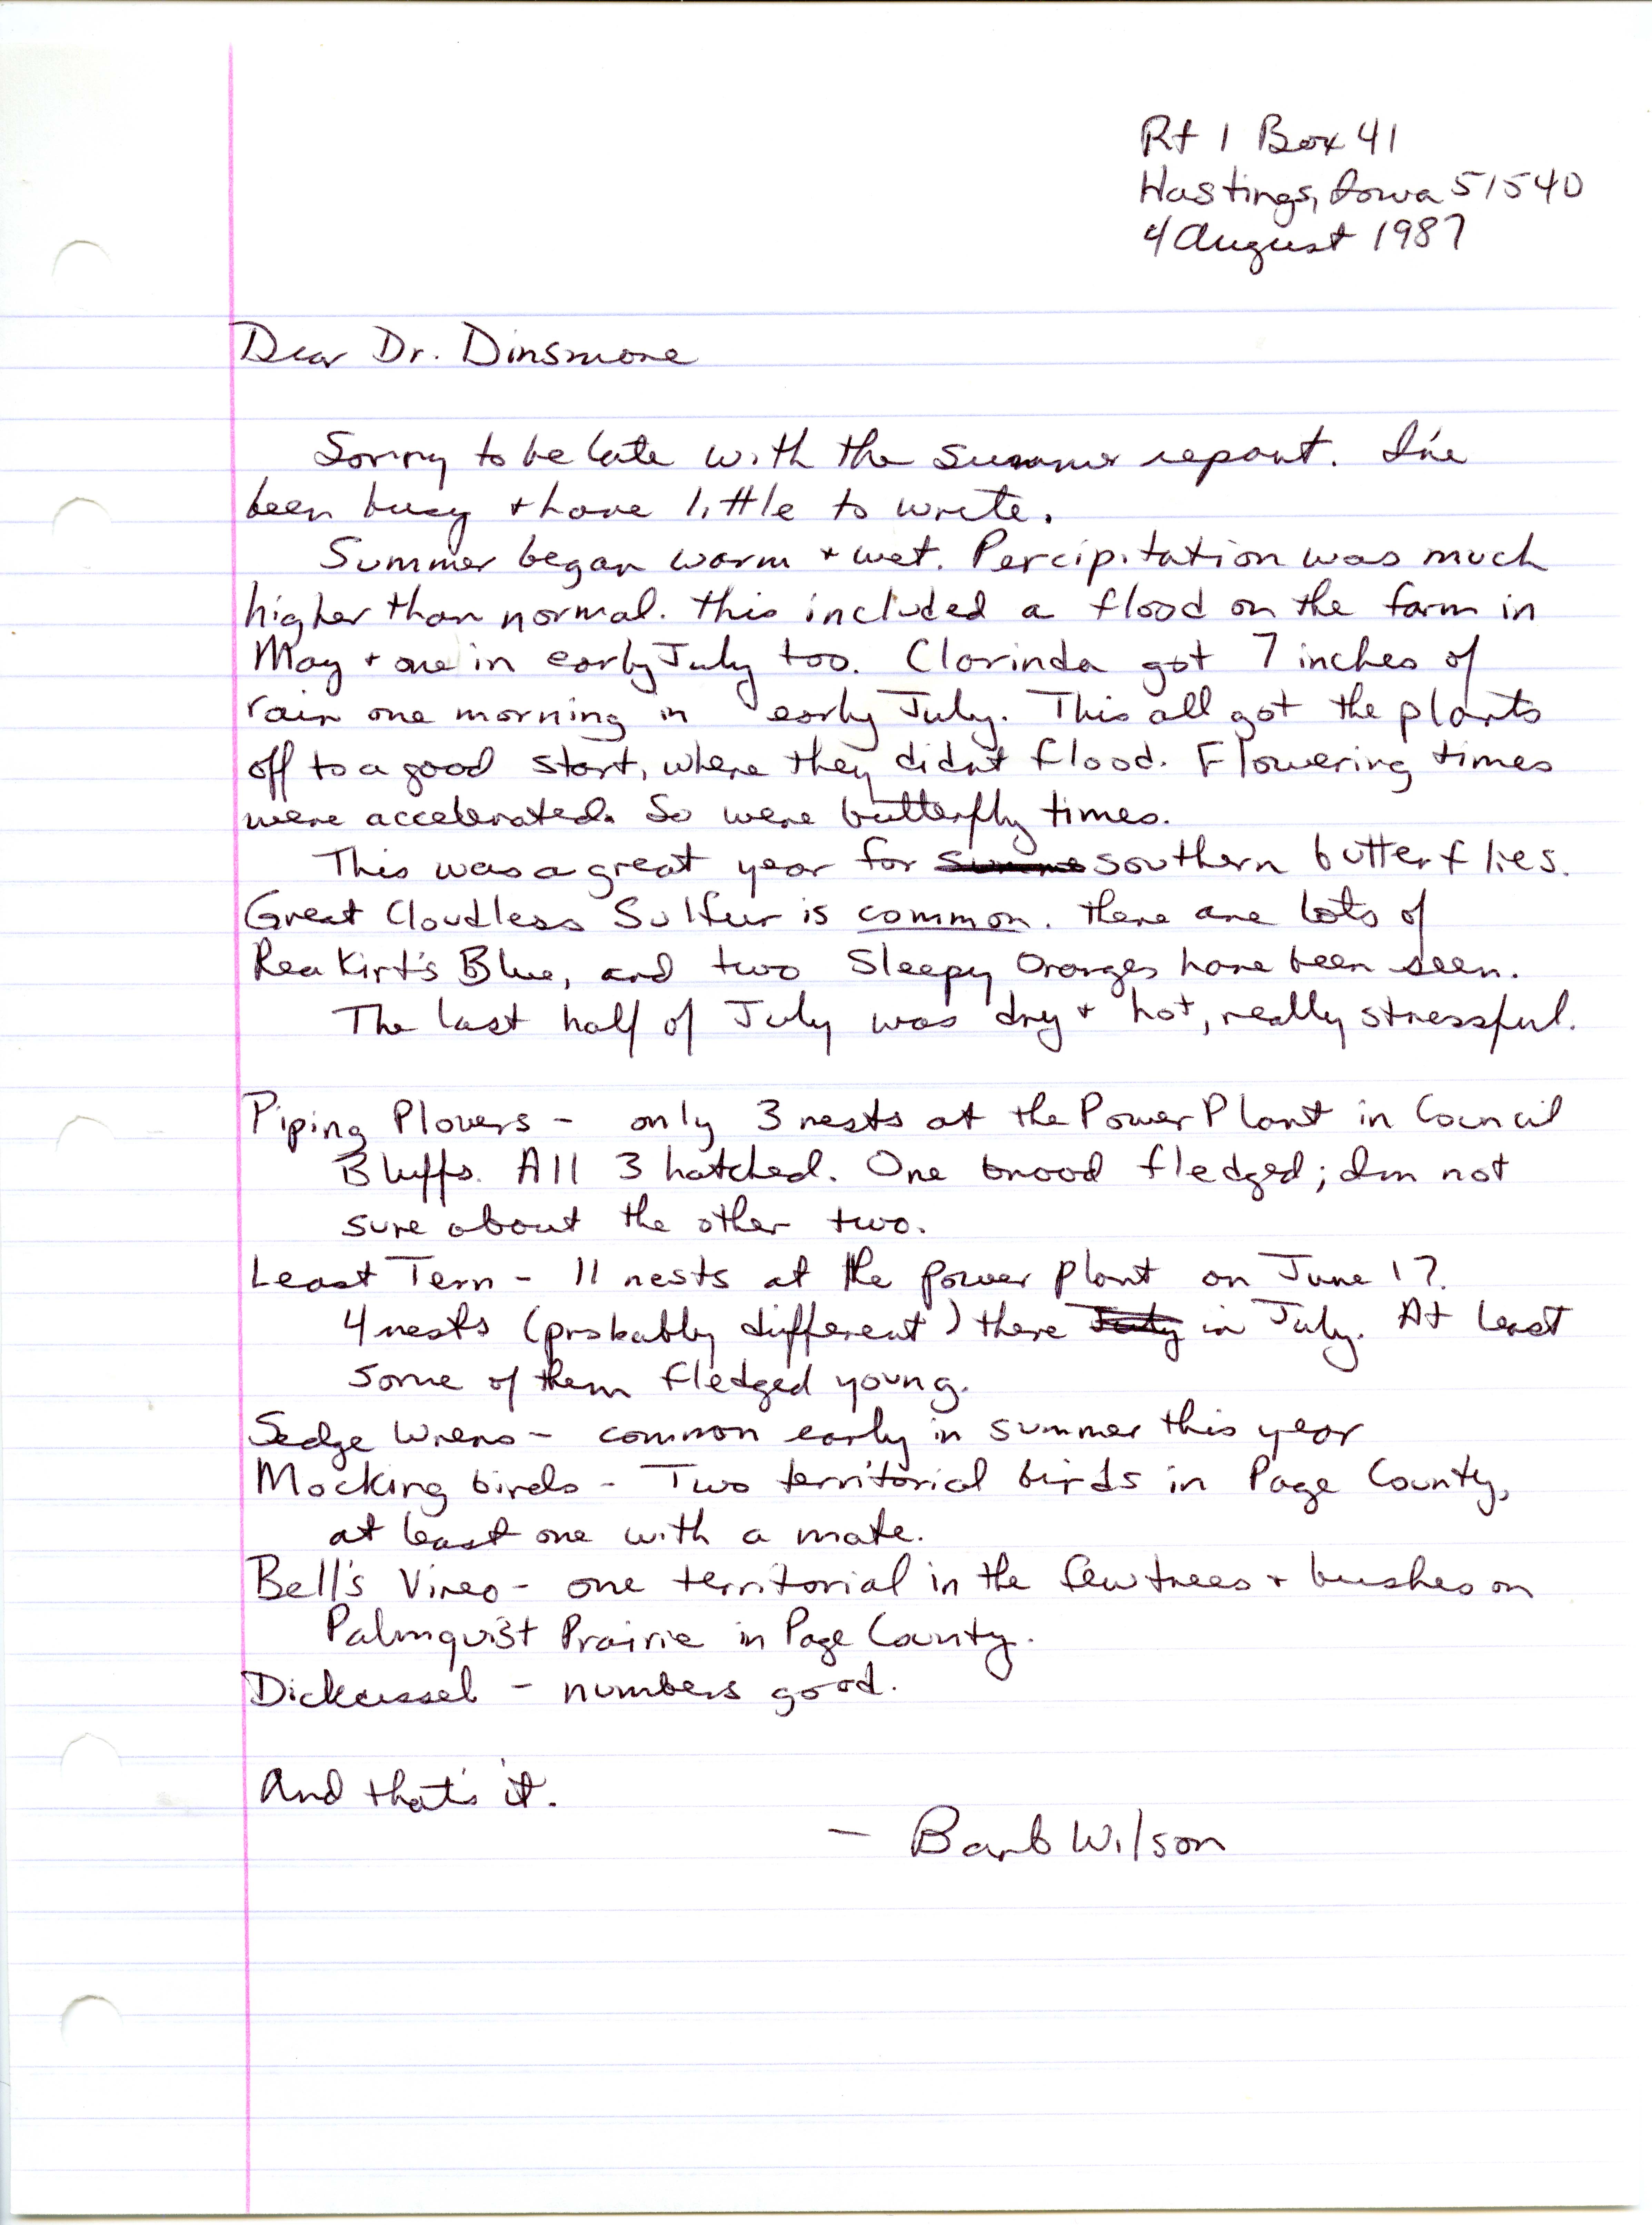 Barbara L. Wilson letter to James J. Dinsmore regarding summer bird sightings, August 4, 1987